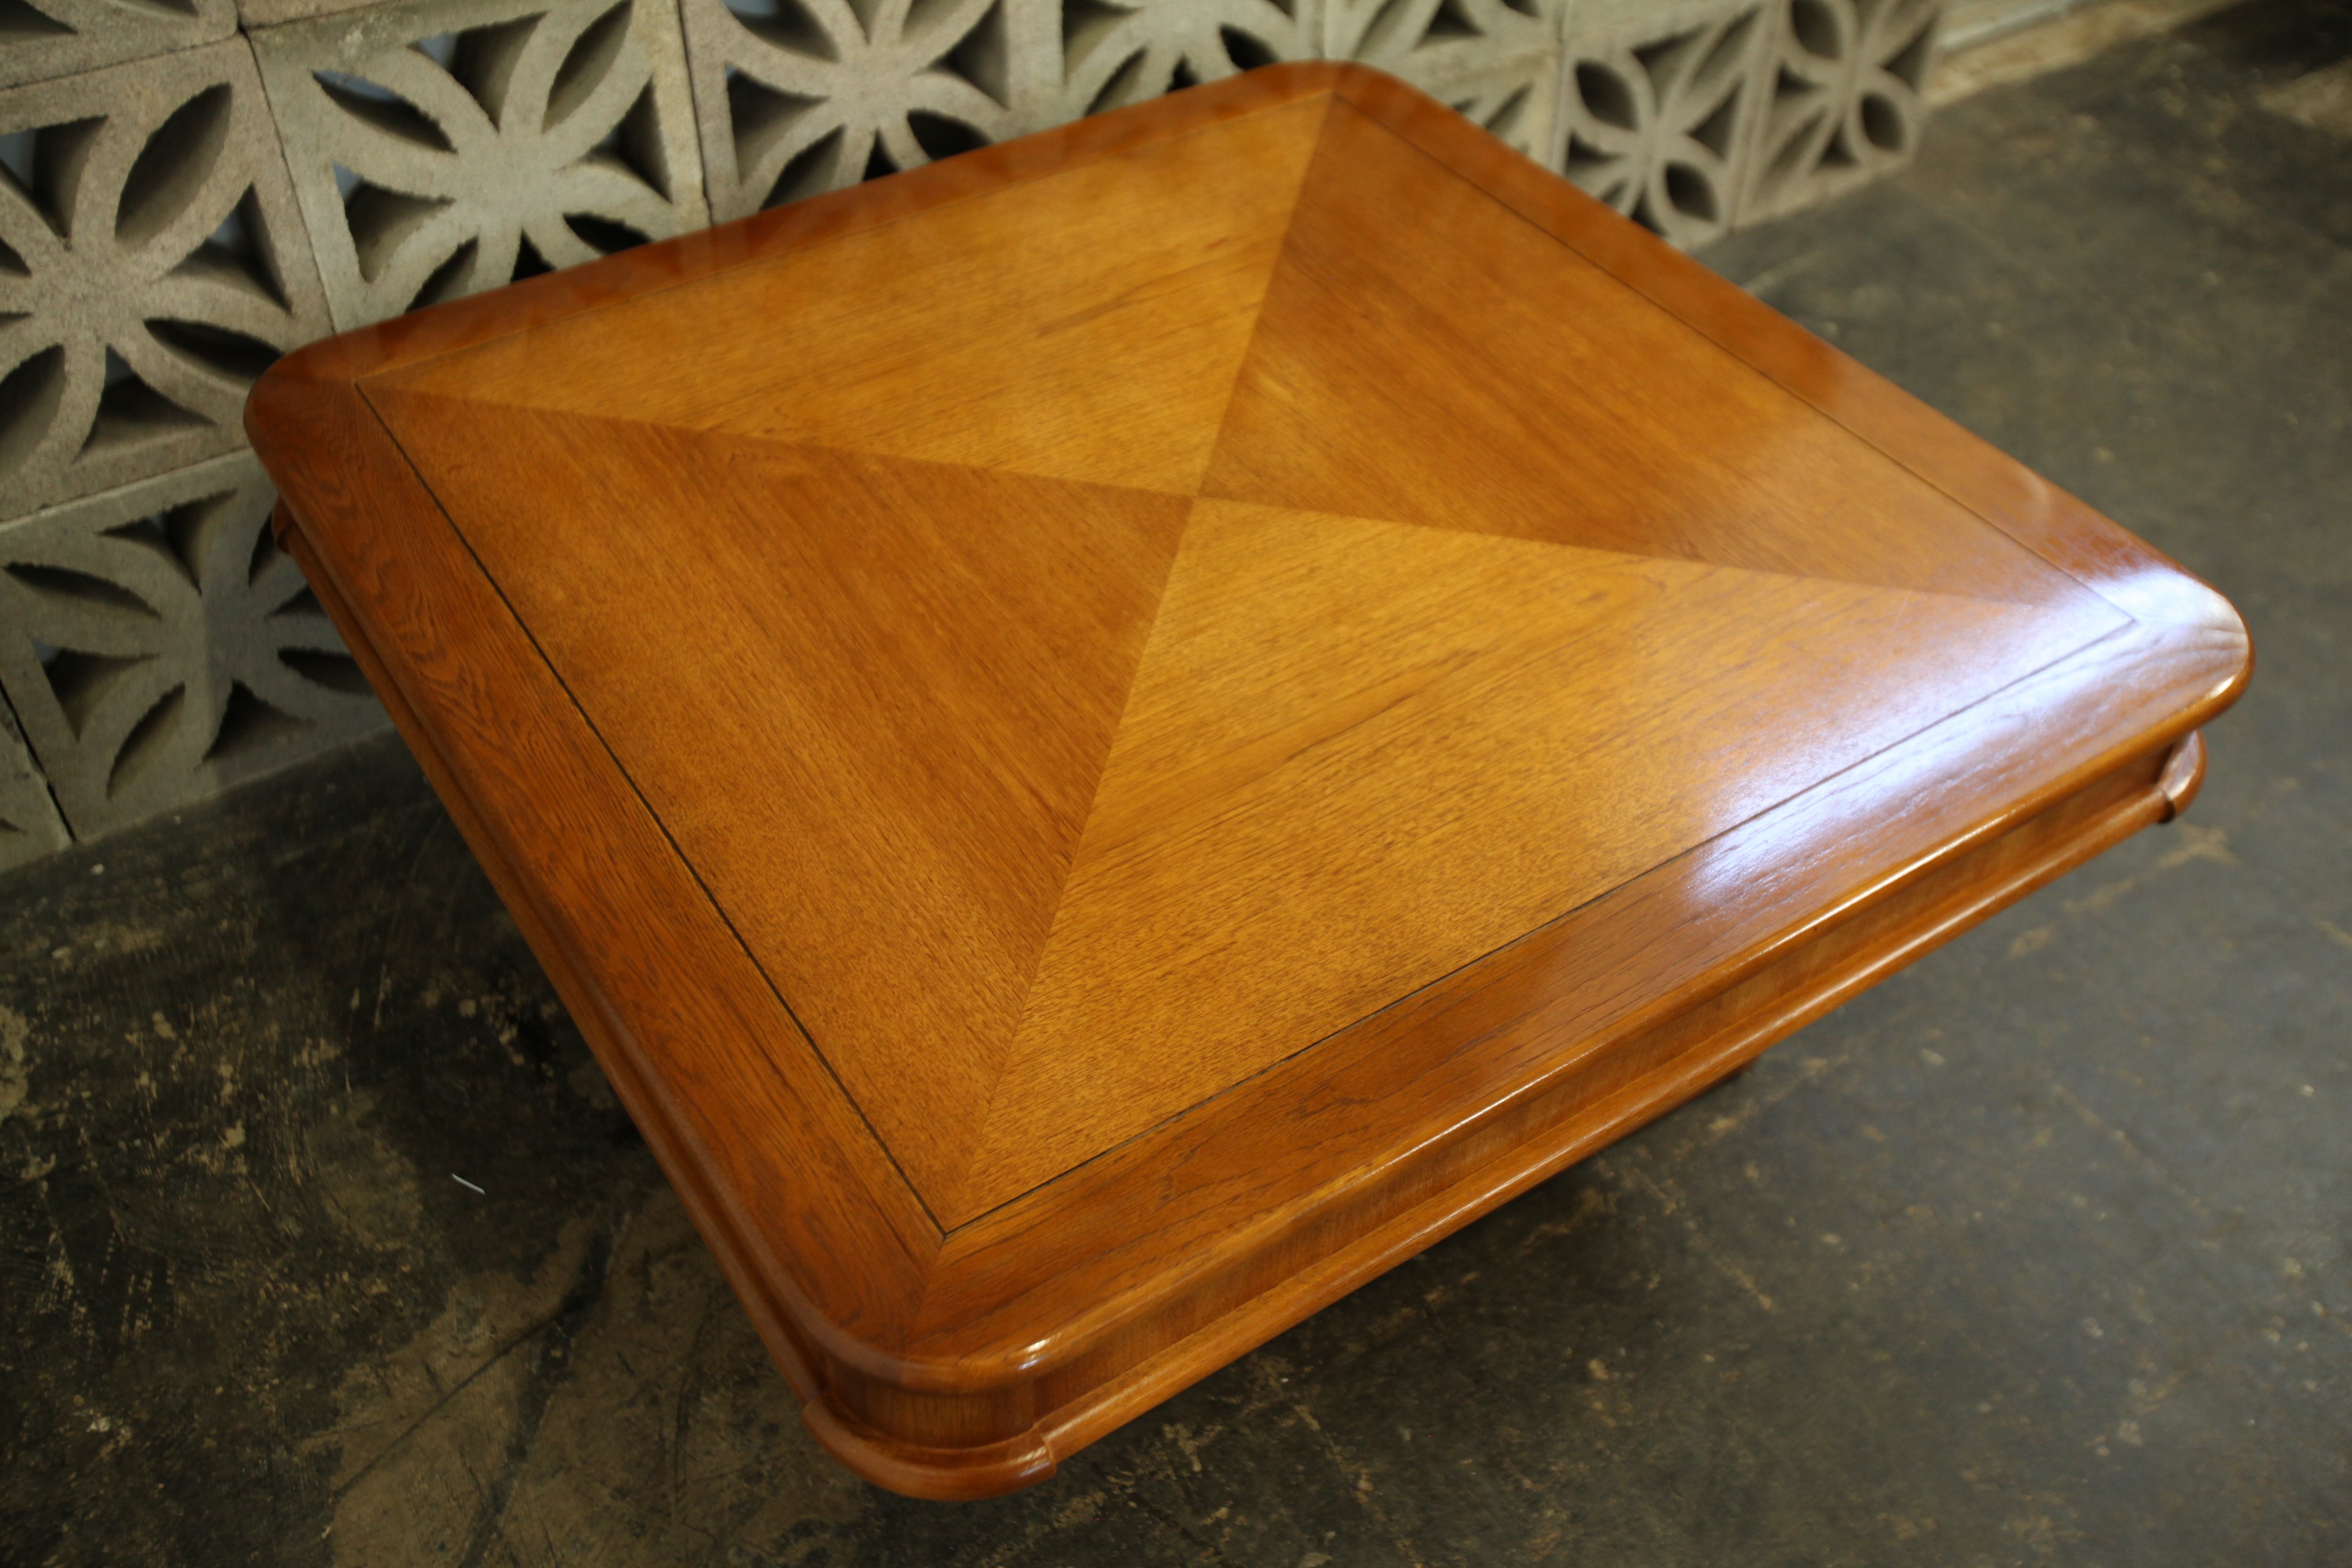 Vintage Wood Square Coffee Table (38" x 38" x 16.25"H)